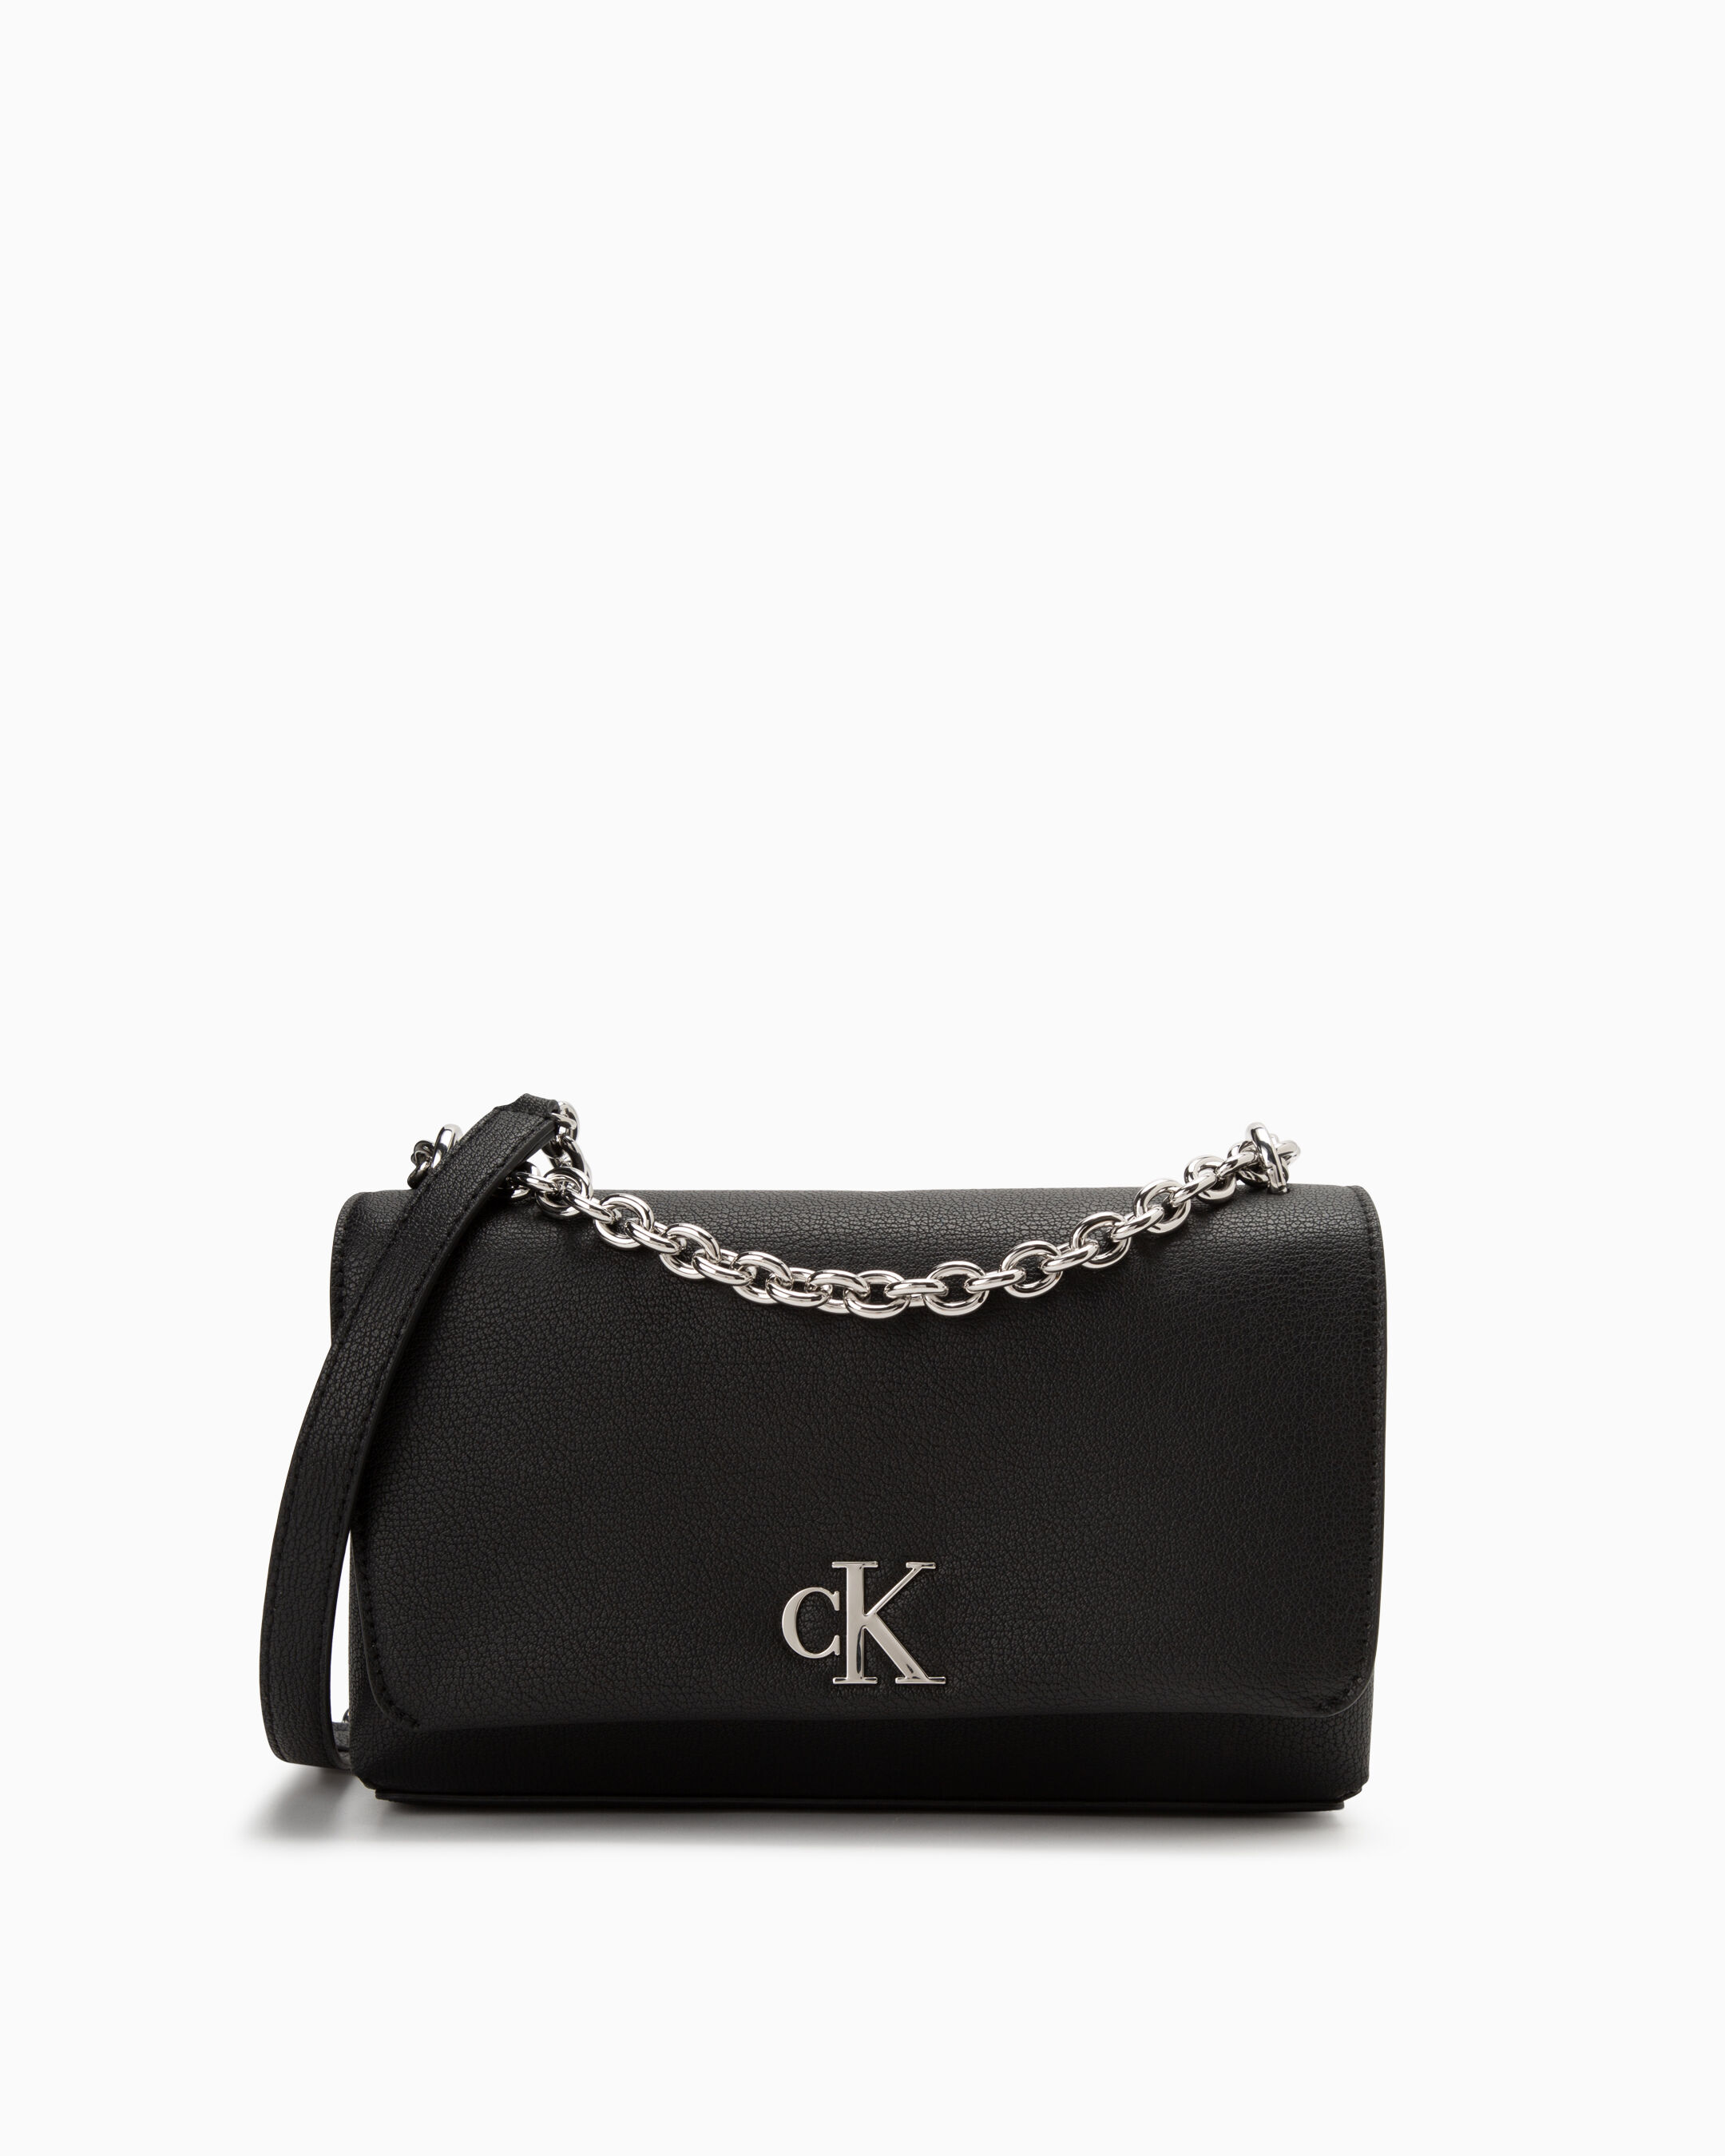 Calvin Klein Black Crossbody Bag, Black CK Purse, Shoulderbag, Designer  Satchel, Small Handbag - Etsy